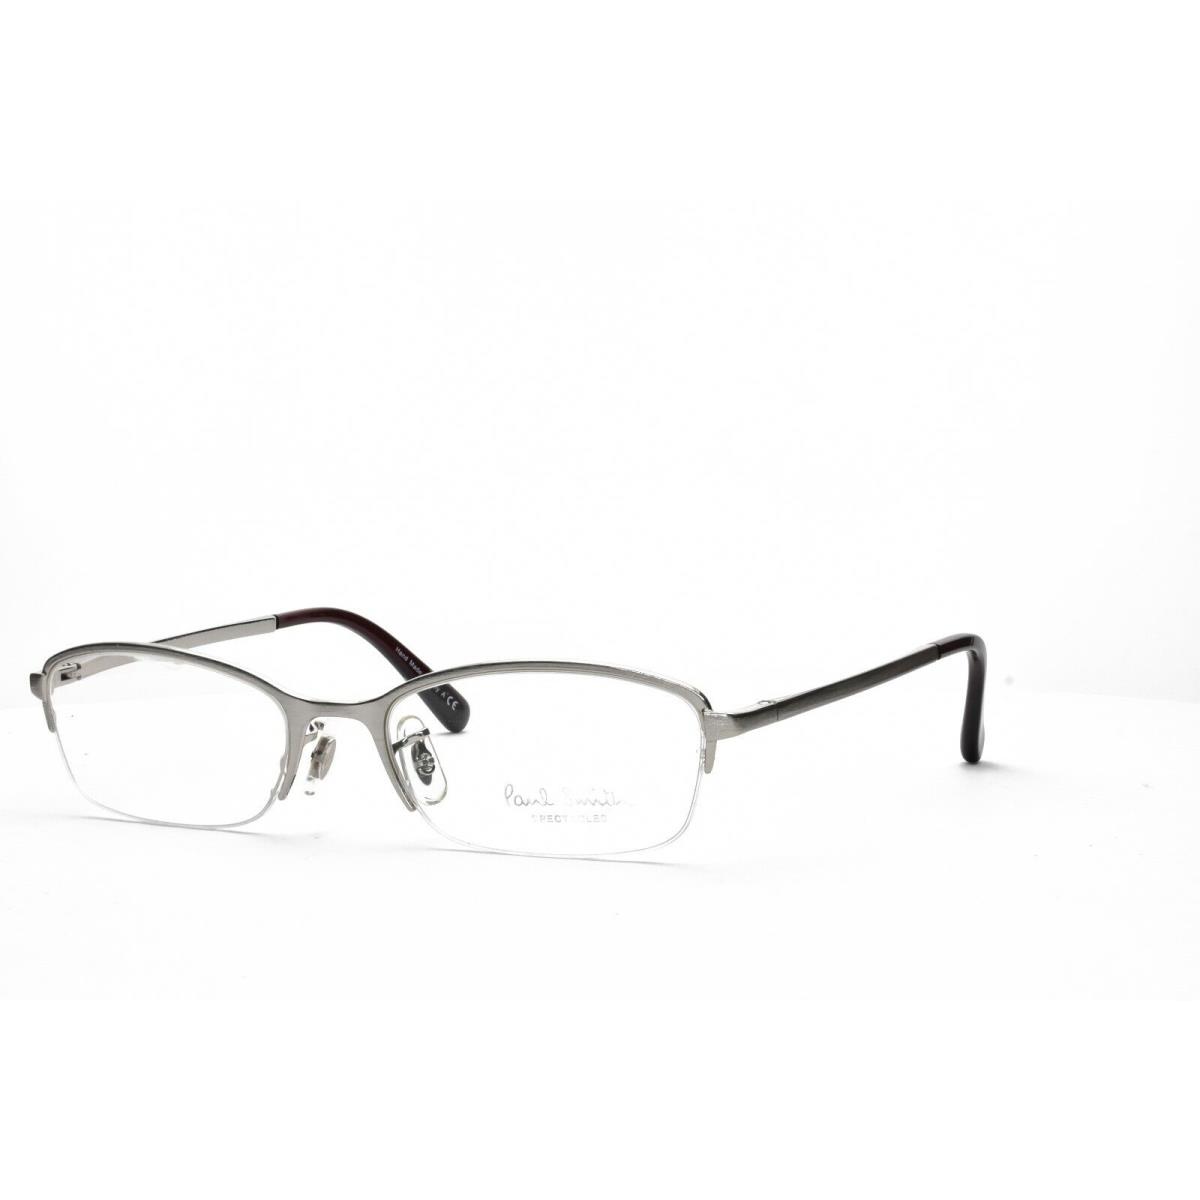 Paul Smith PS Addington 4050 5063 Eyeglasses Frames Only 51-17-130